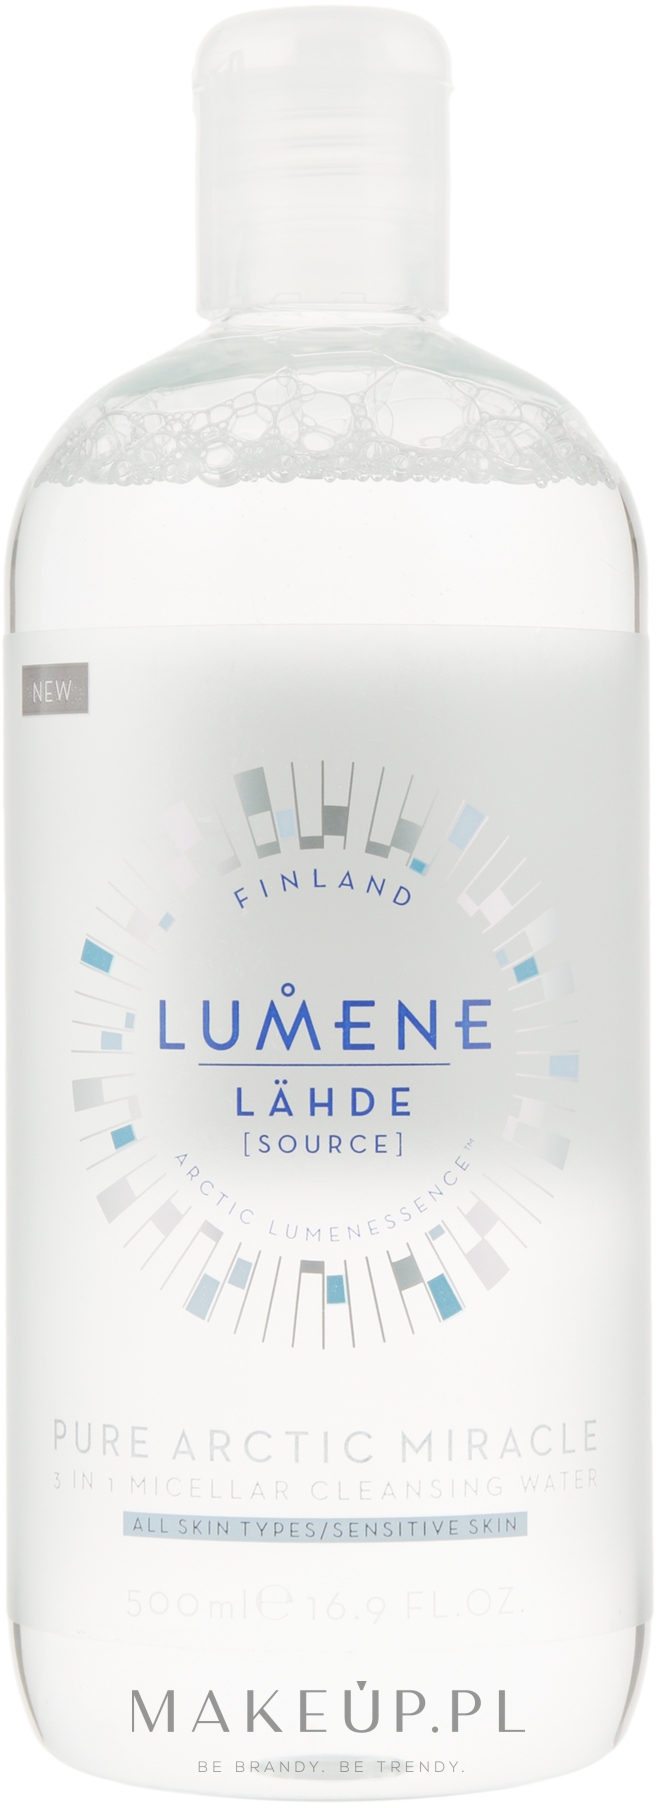 Płyn micelarny 3 w 1 - Lumene Lahde [Source] Pure Arctic Miracle 3 In 1 Micellar Cleansing Water — Zdjęcie 500 ml